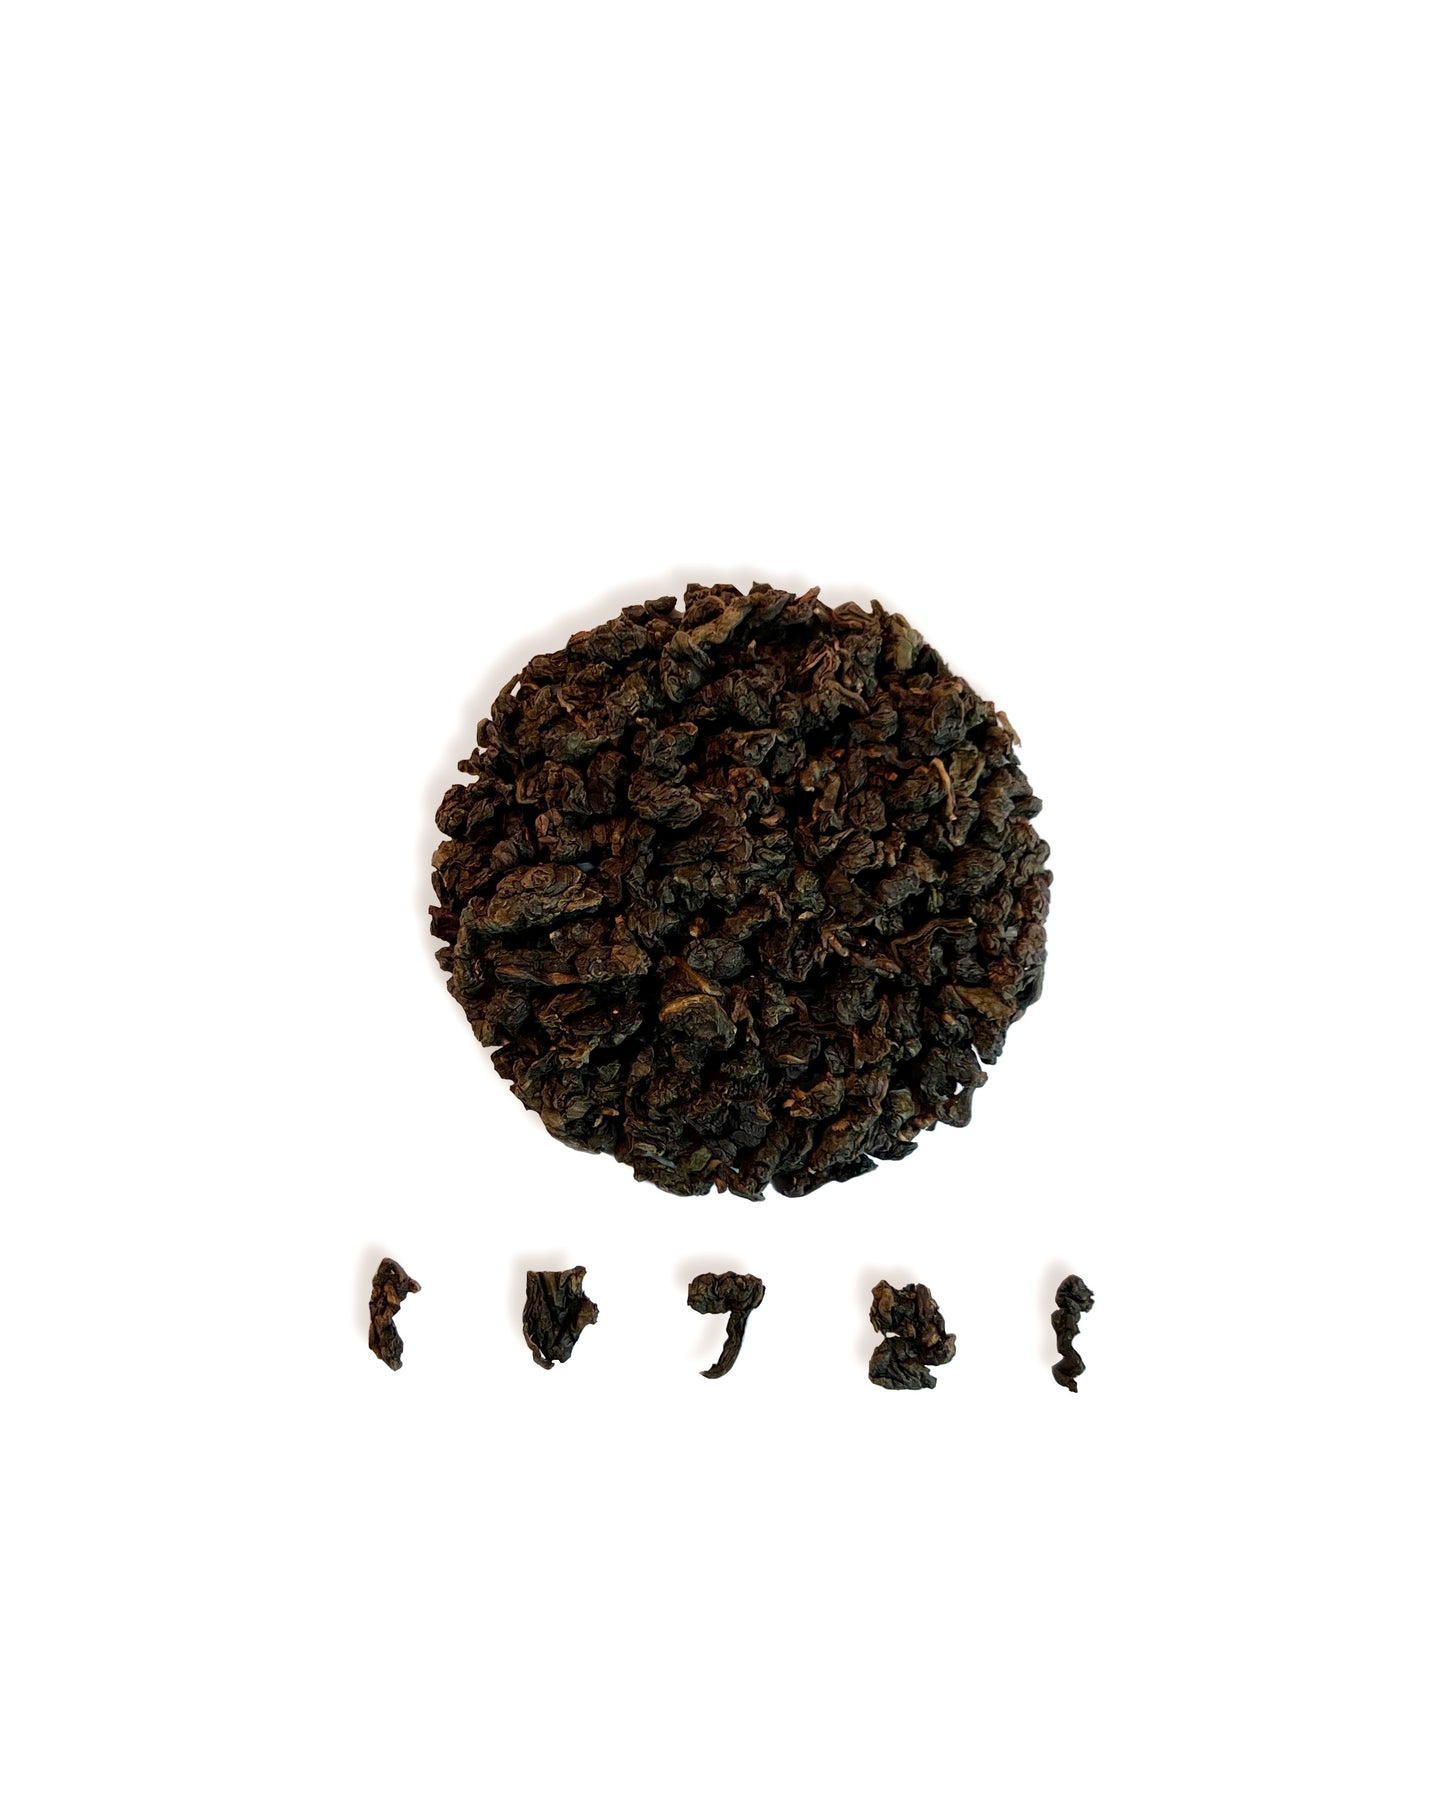 Wild Arb Ti Kwan Yin Oolong Tea Loose Tea Leaf